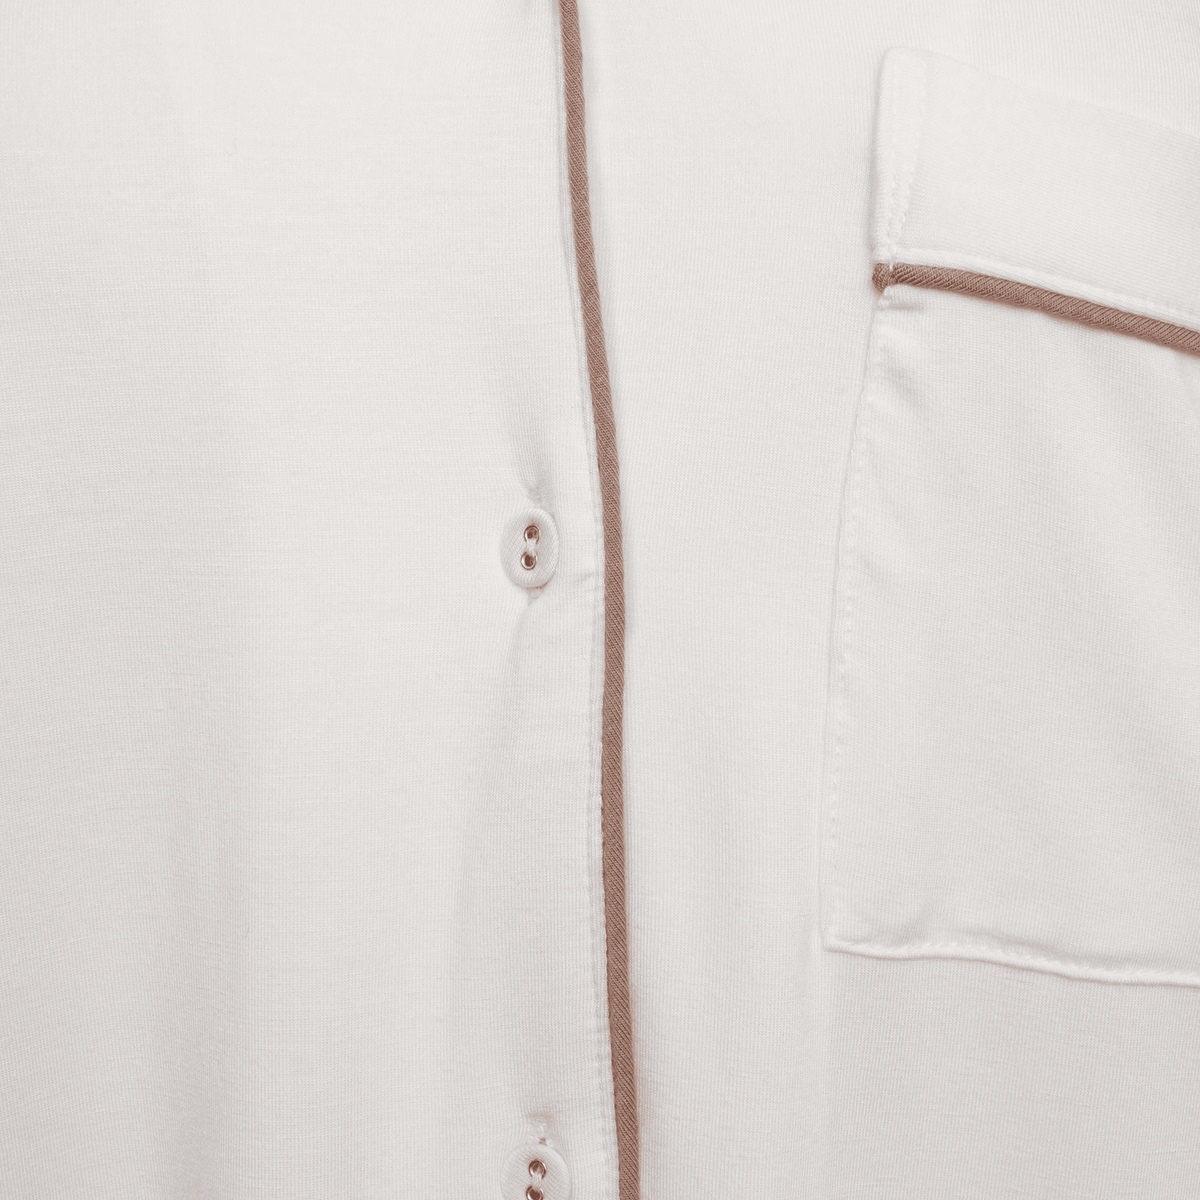 Rayon Stretch Pyjama Trouser Set - Dove - The NAP Co.